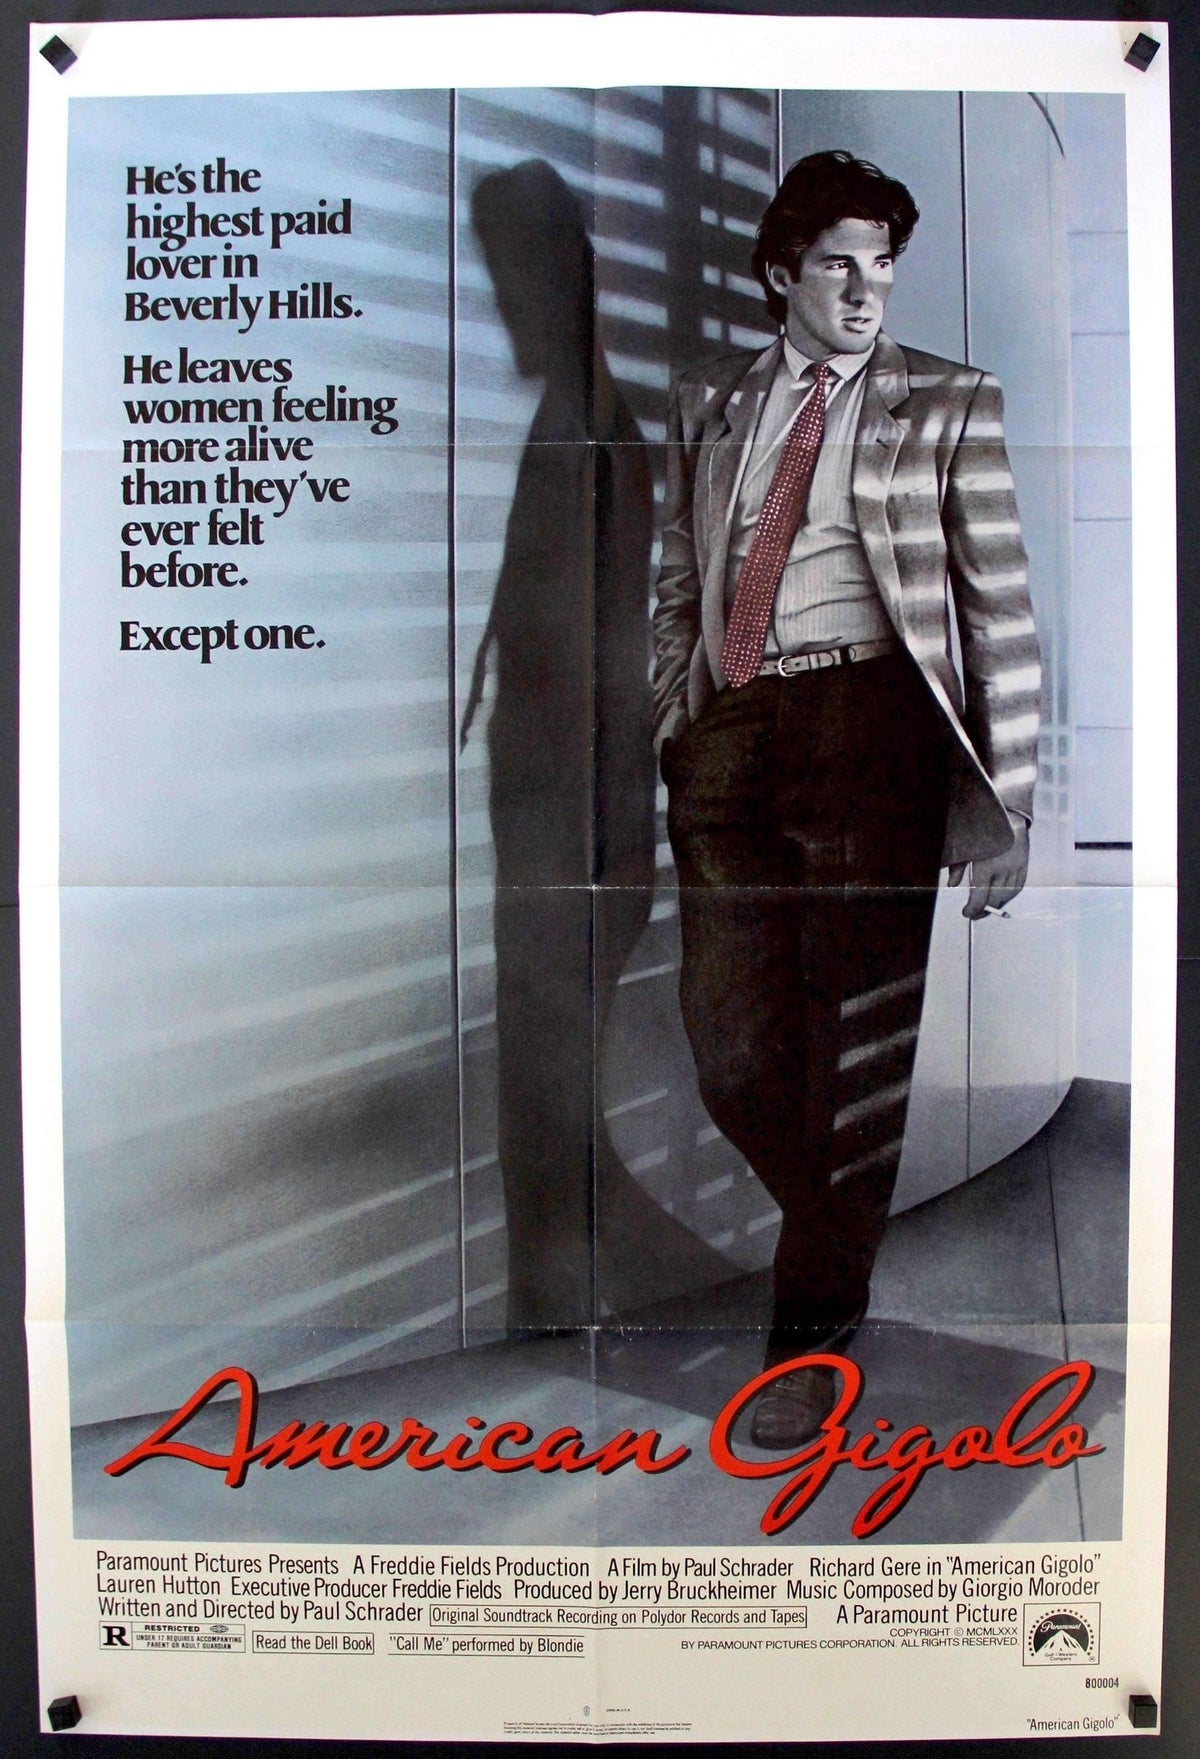 American Gigolo (1980) original movie poster for sale at Original Film Art